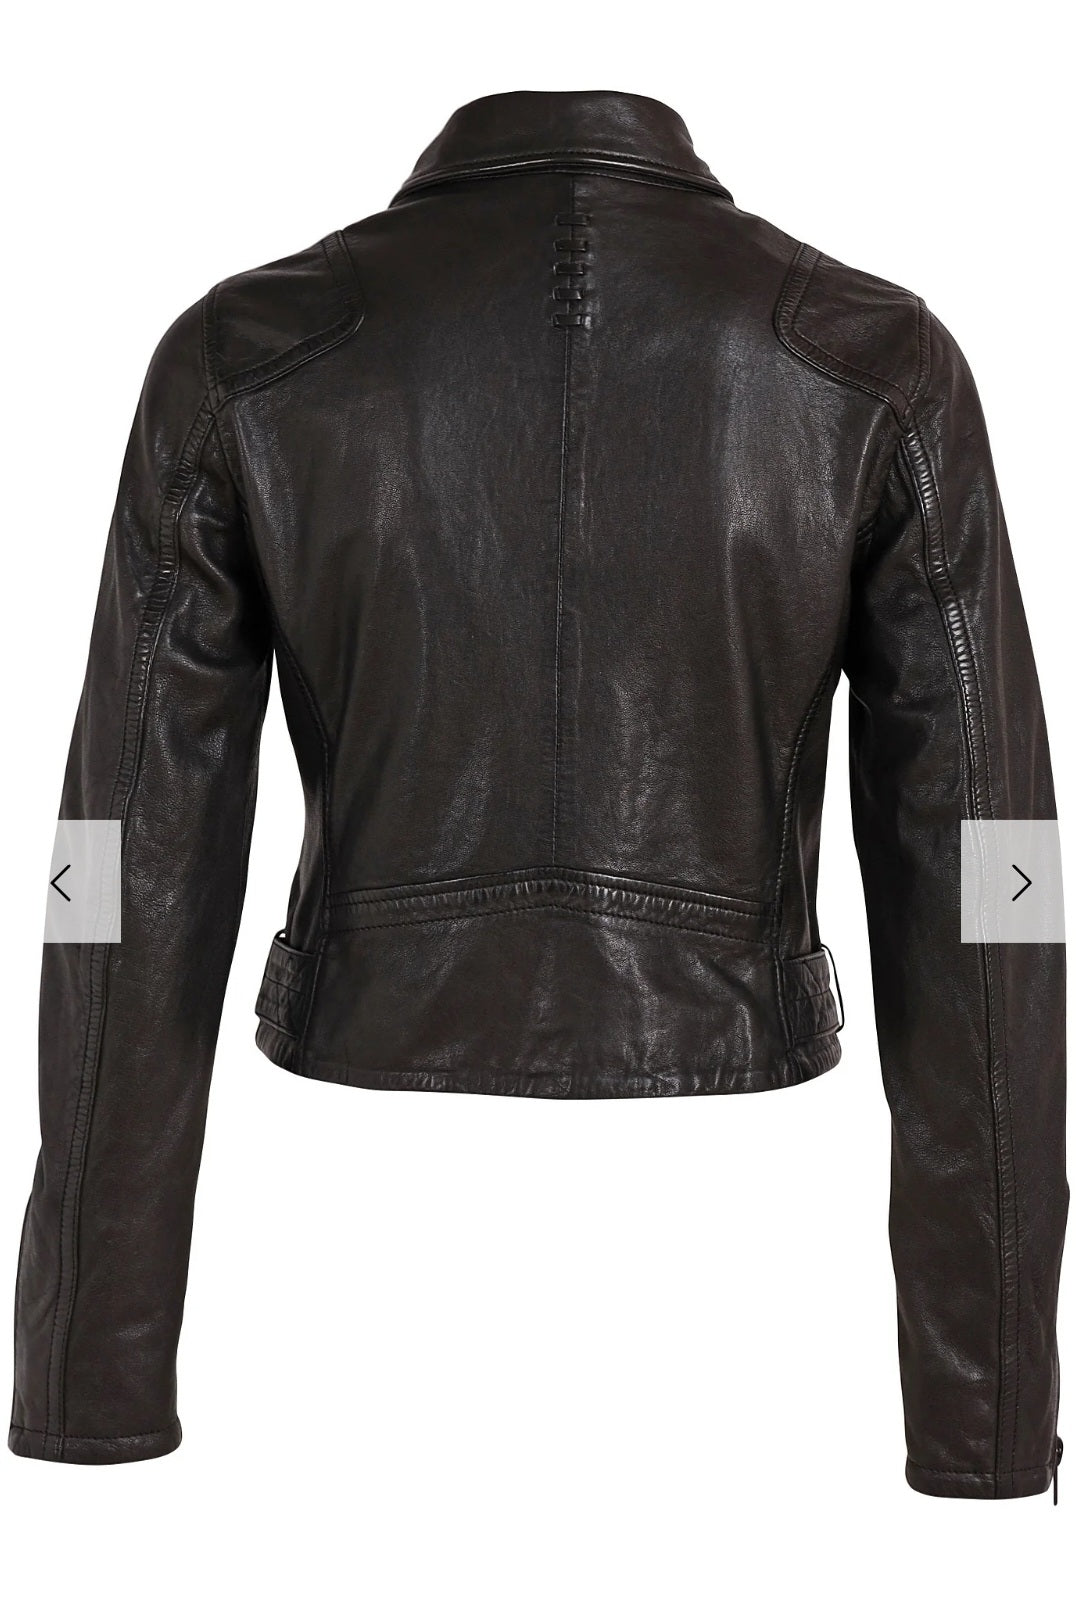 Bita Leather Jacket, Black